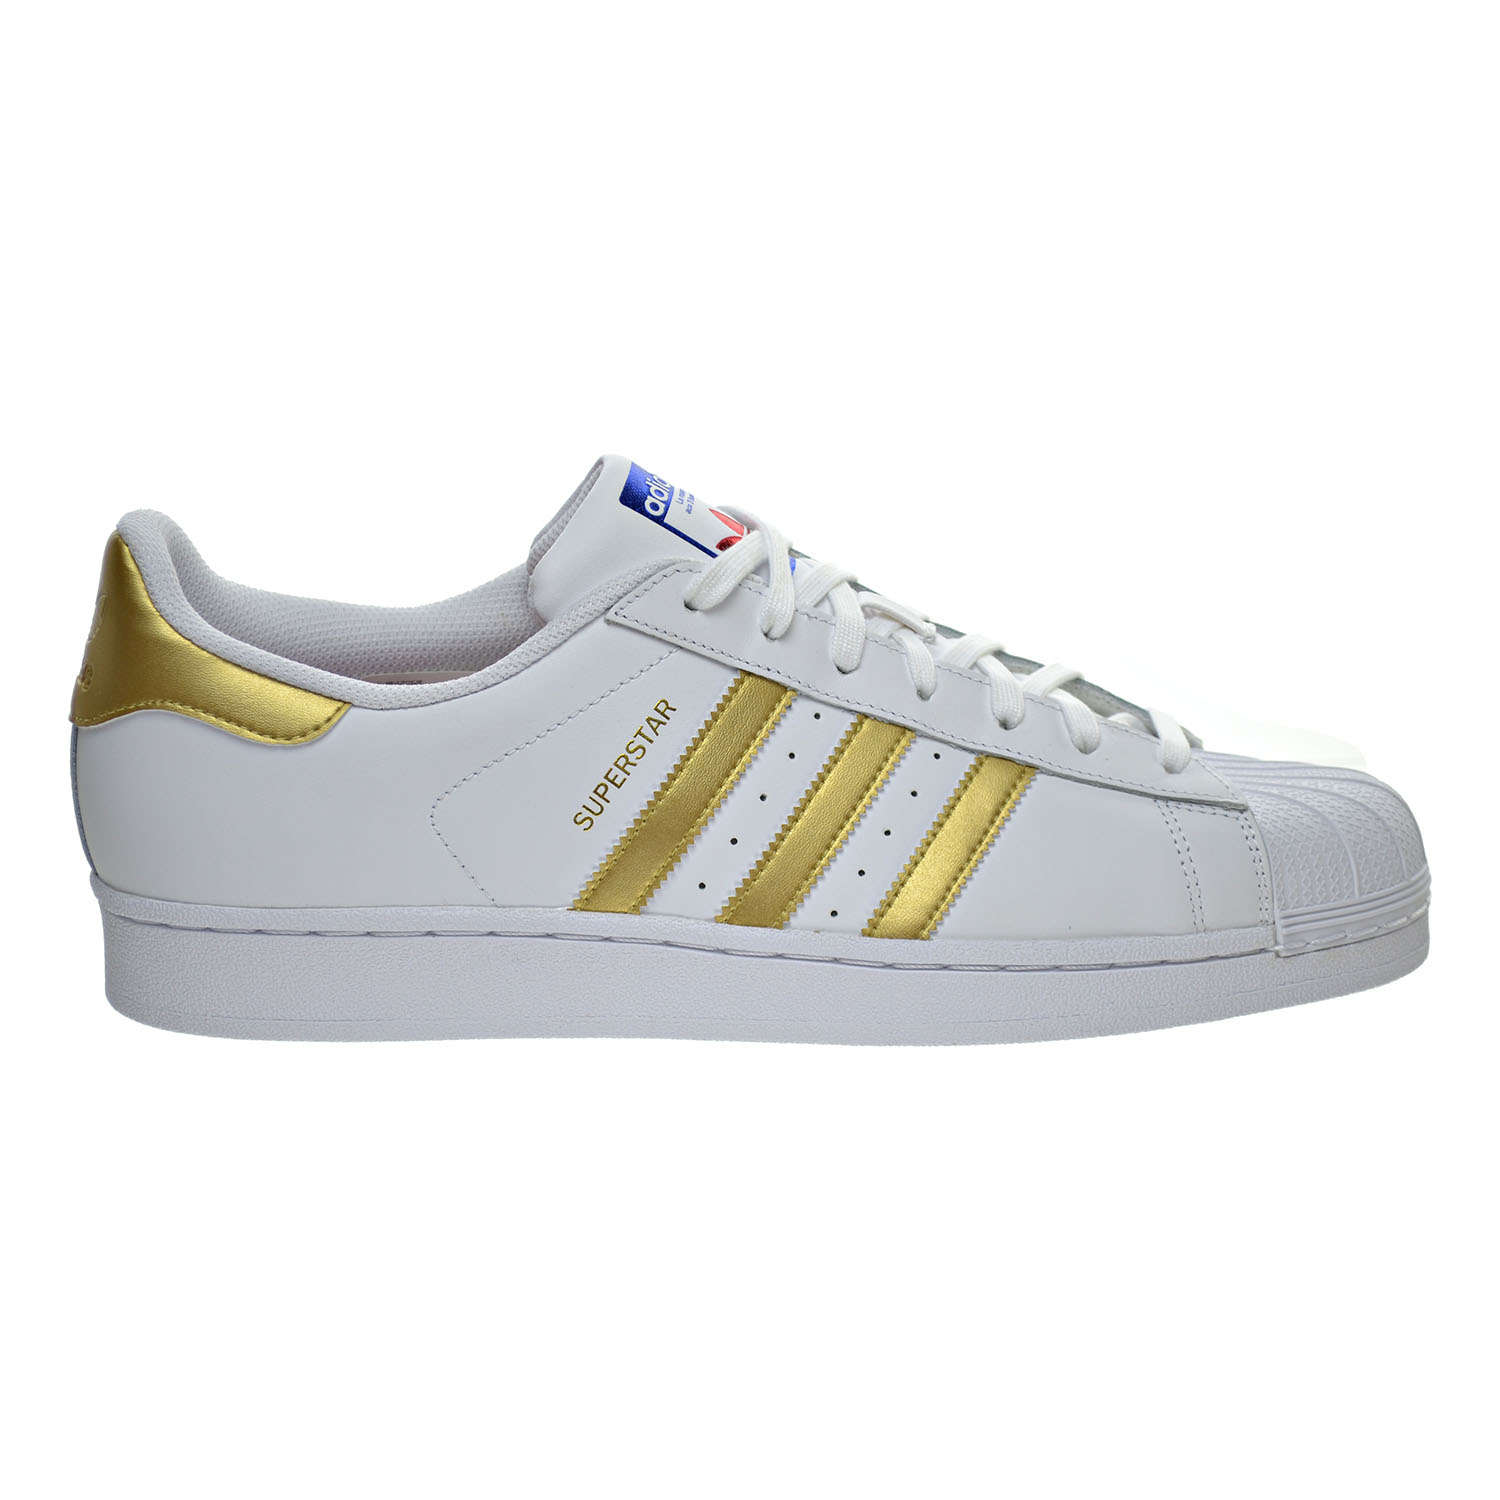 Adidas Superstar Men's Shoes White/Metallic Gold/Blue b39399